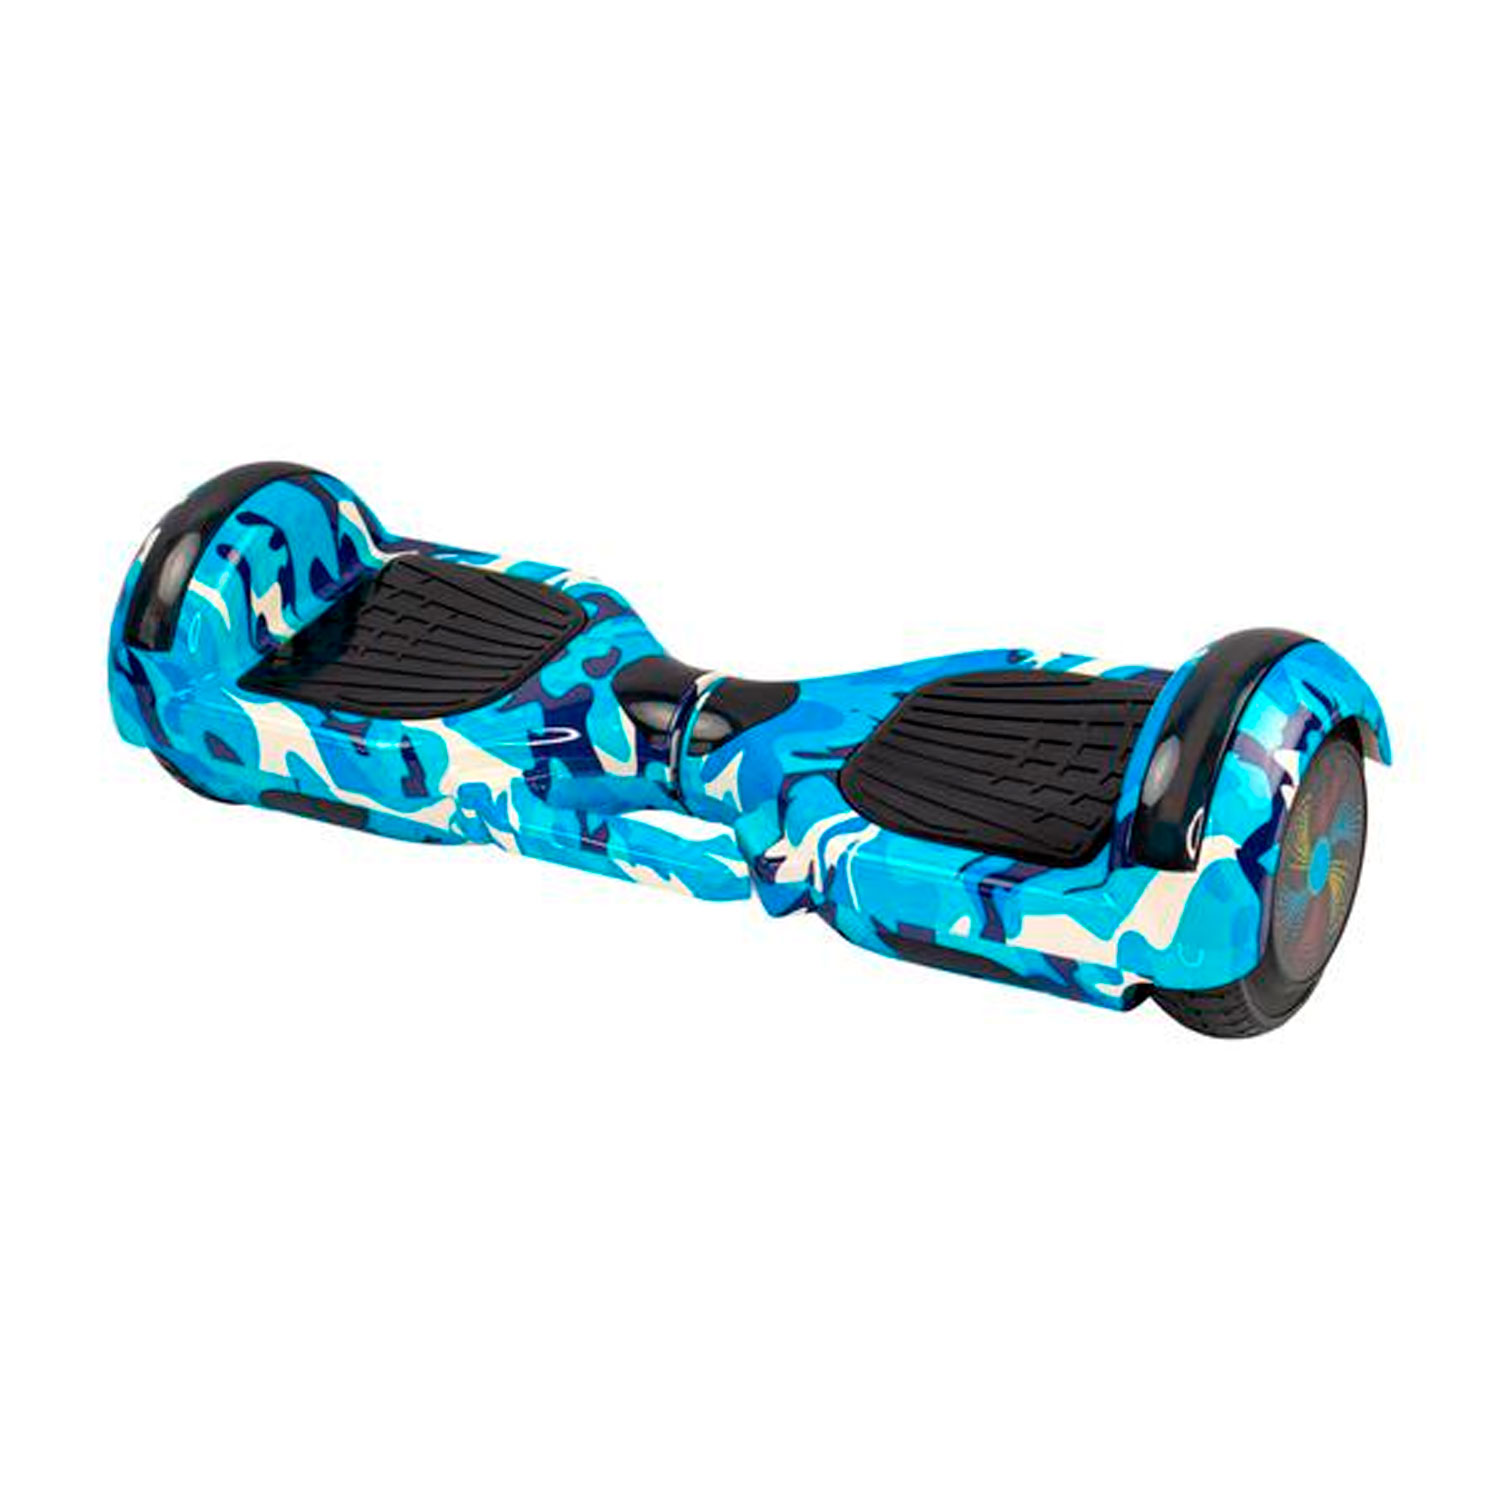 Scooter Elétrico Star Hoverboard 6.5'' / Bluetooth / LED / Bolsa - Azul Camuflado